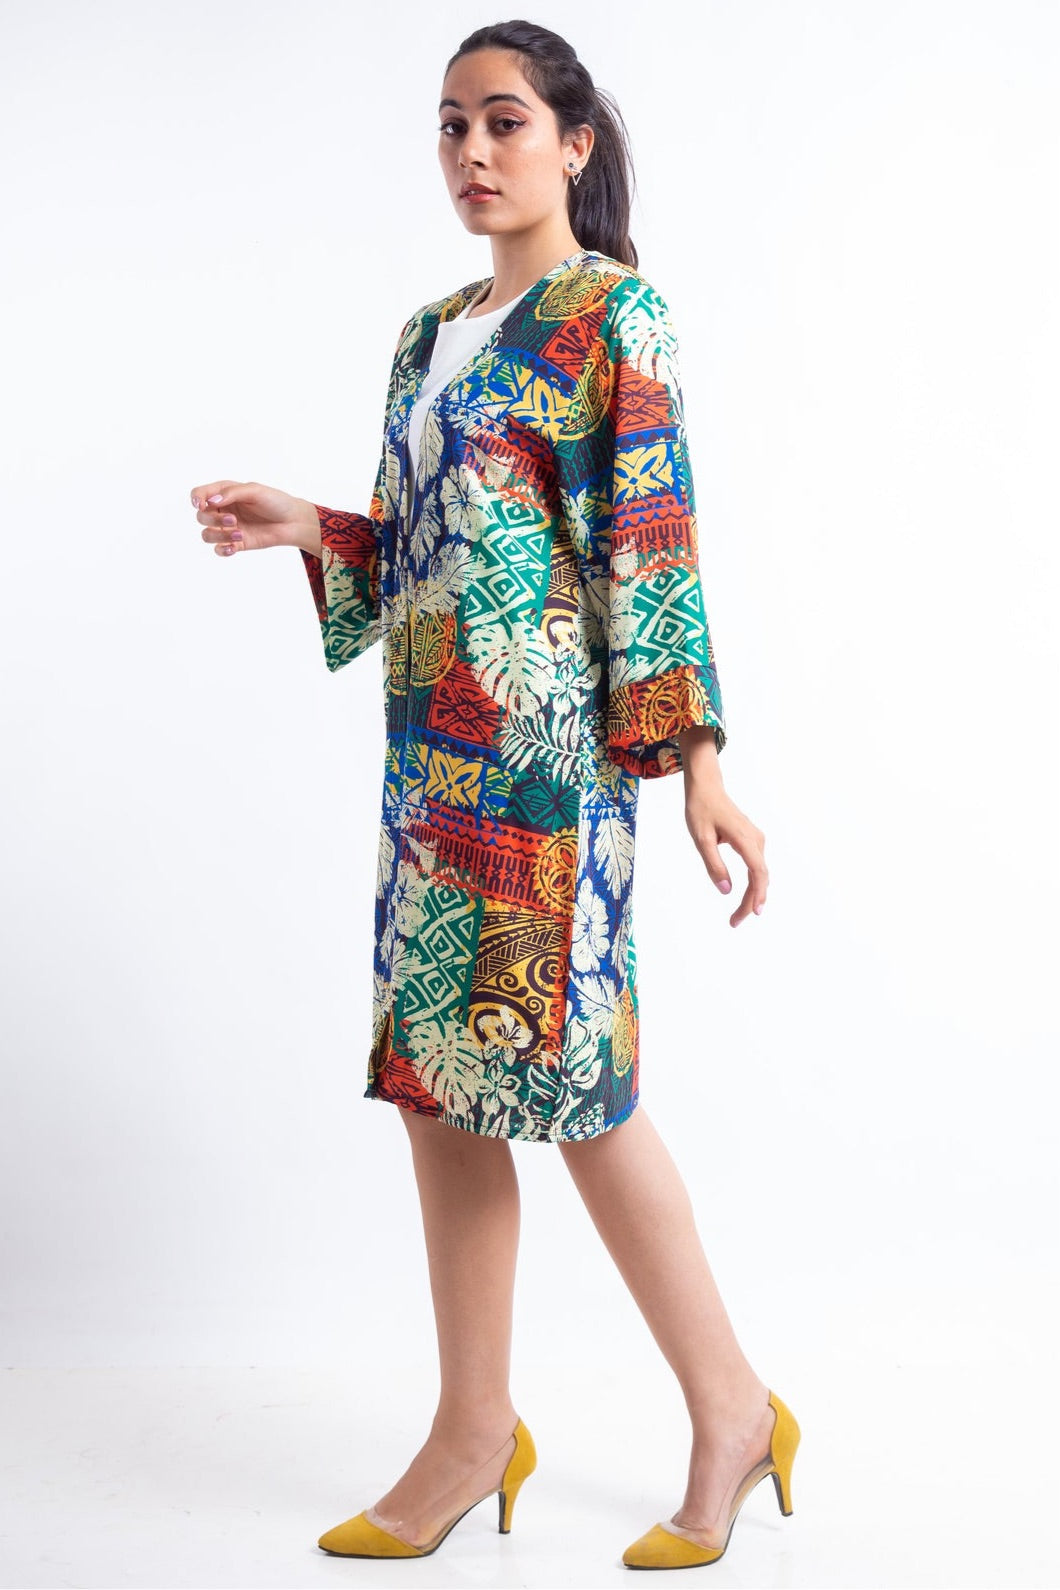 The African Blossom Kimono